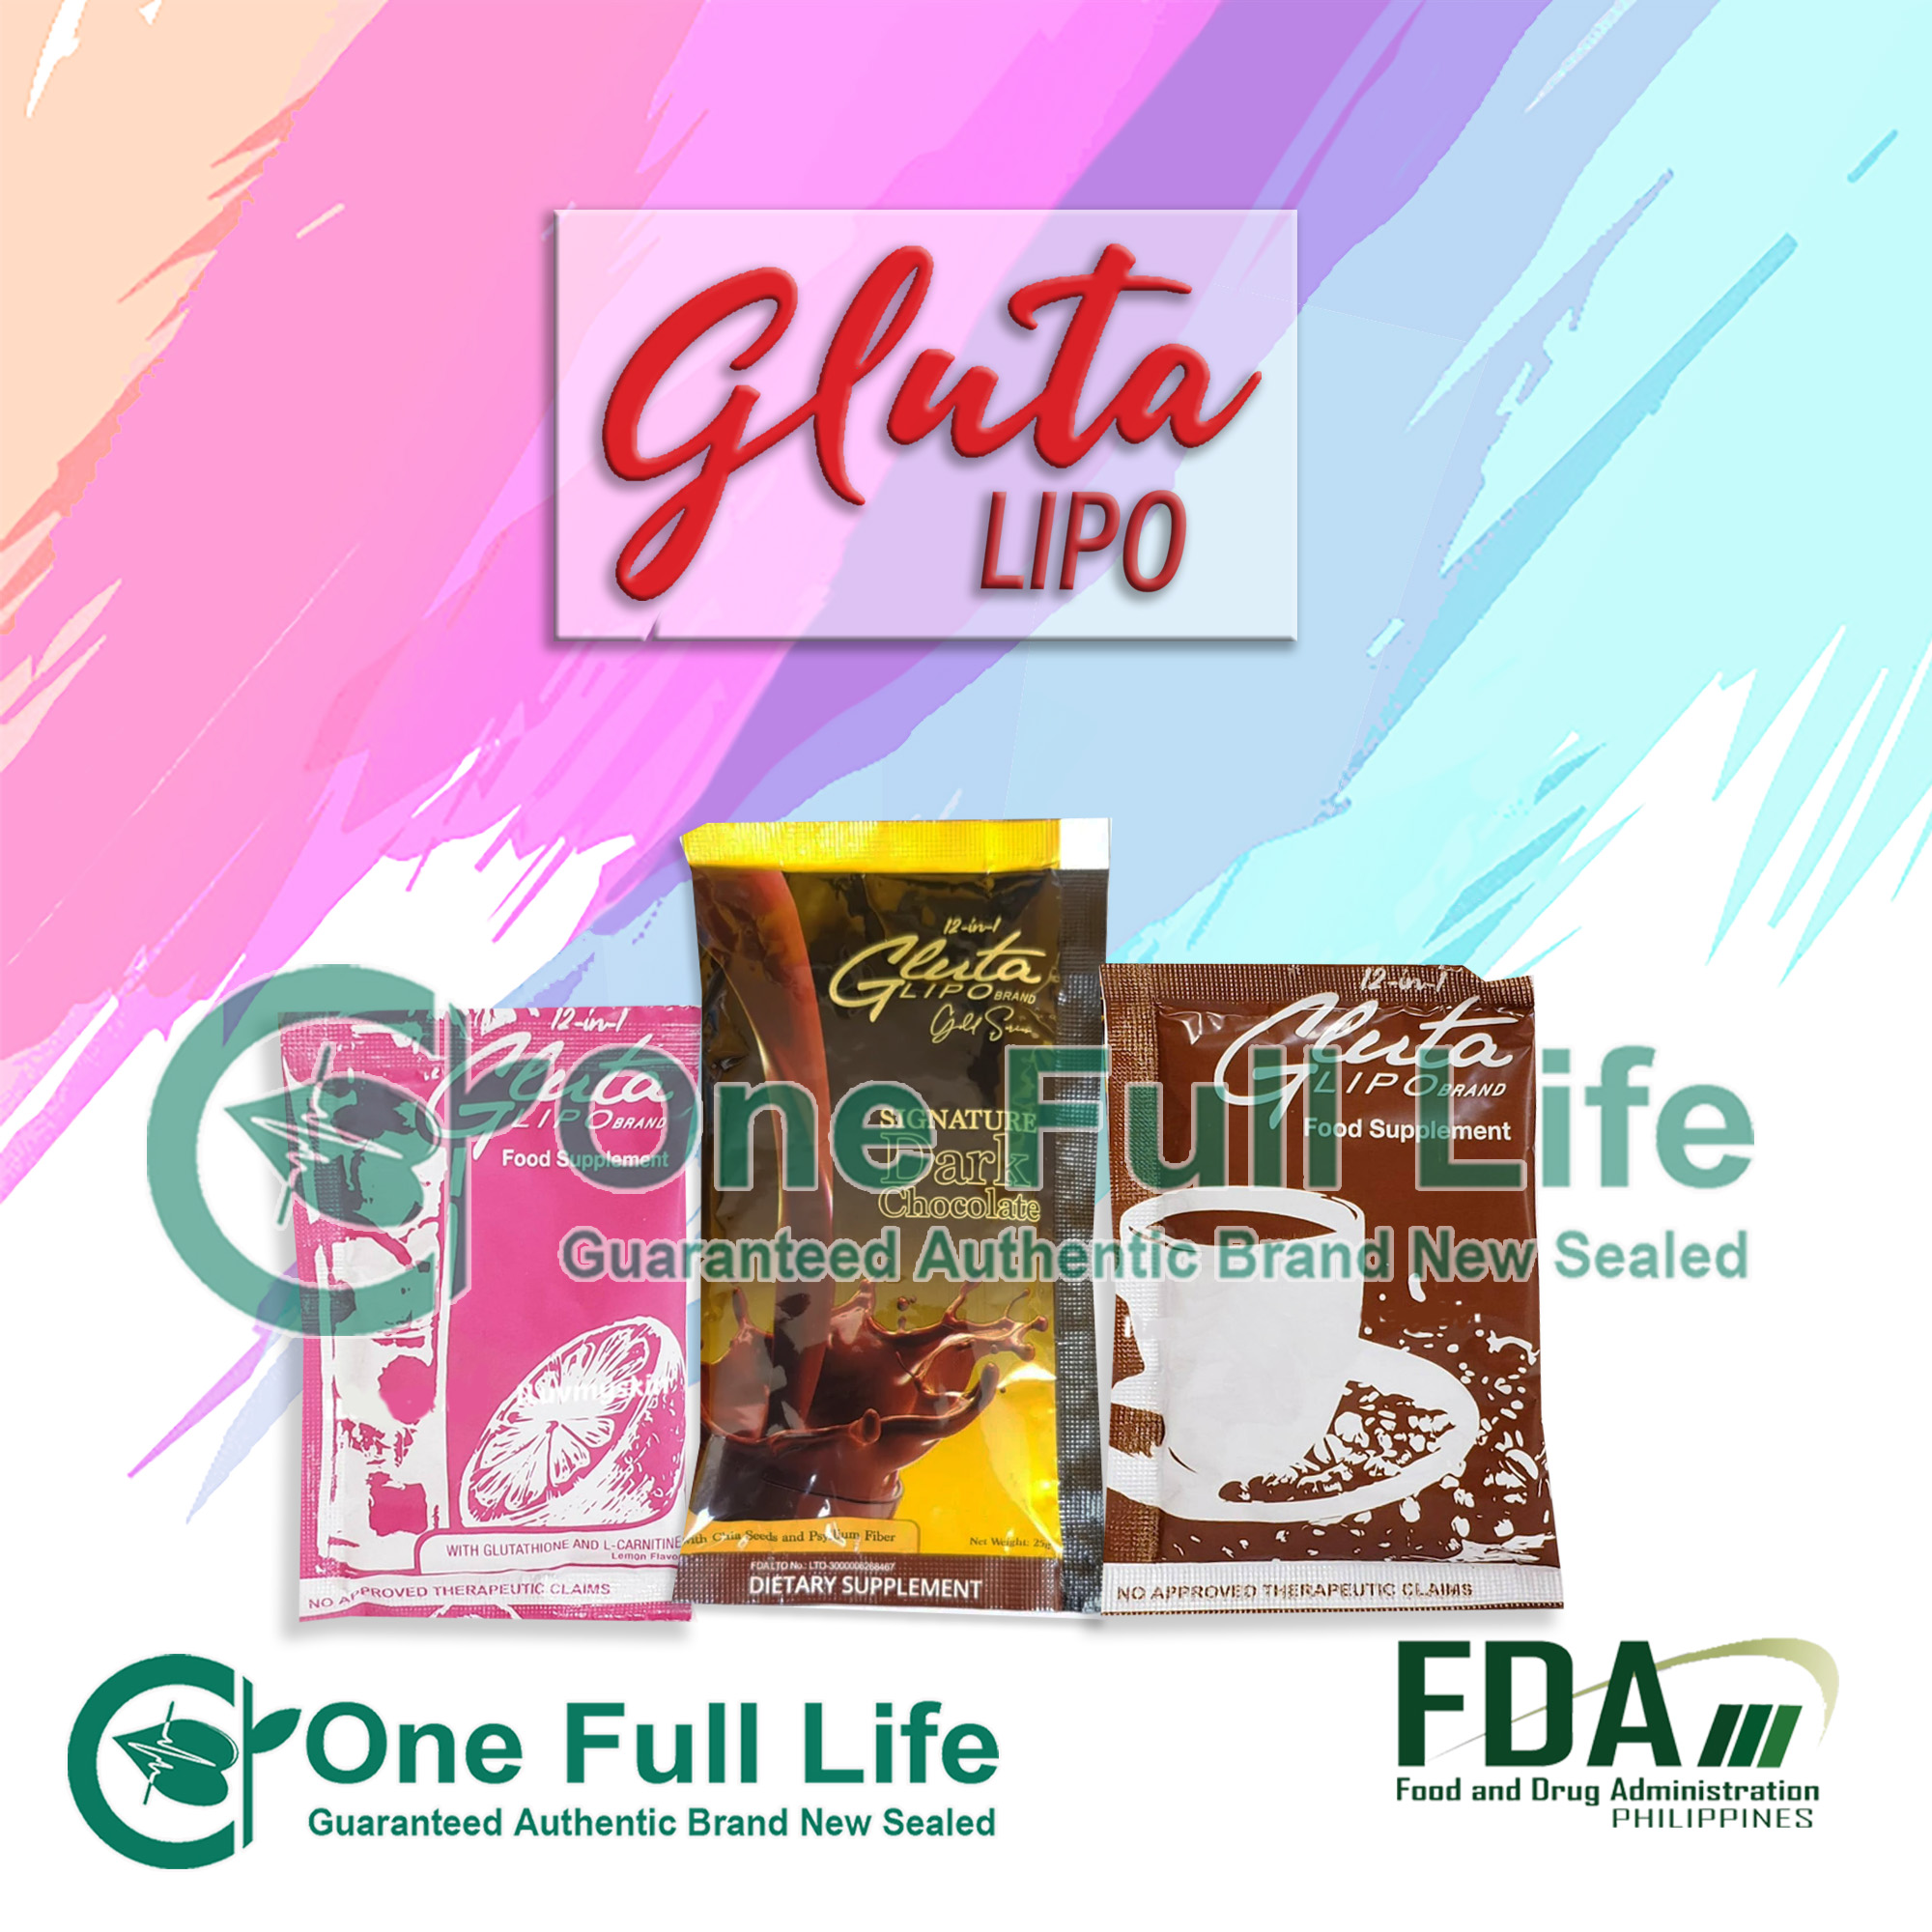 Buy Gluta Lipo Dark Coffee online | Lazada.com.ph